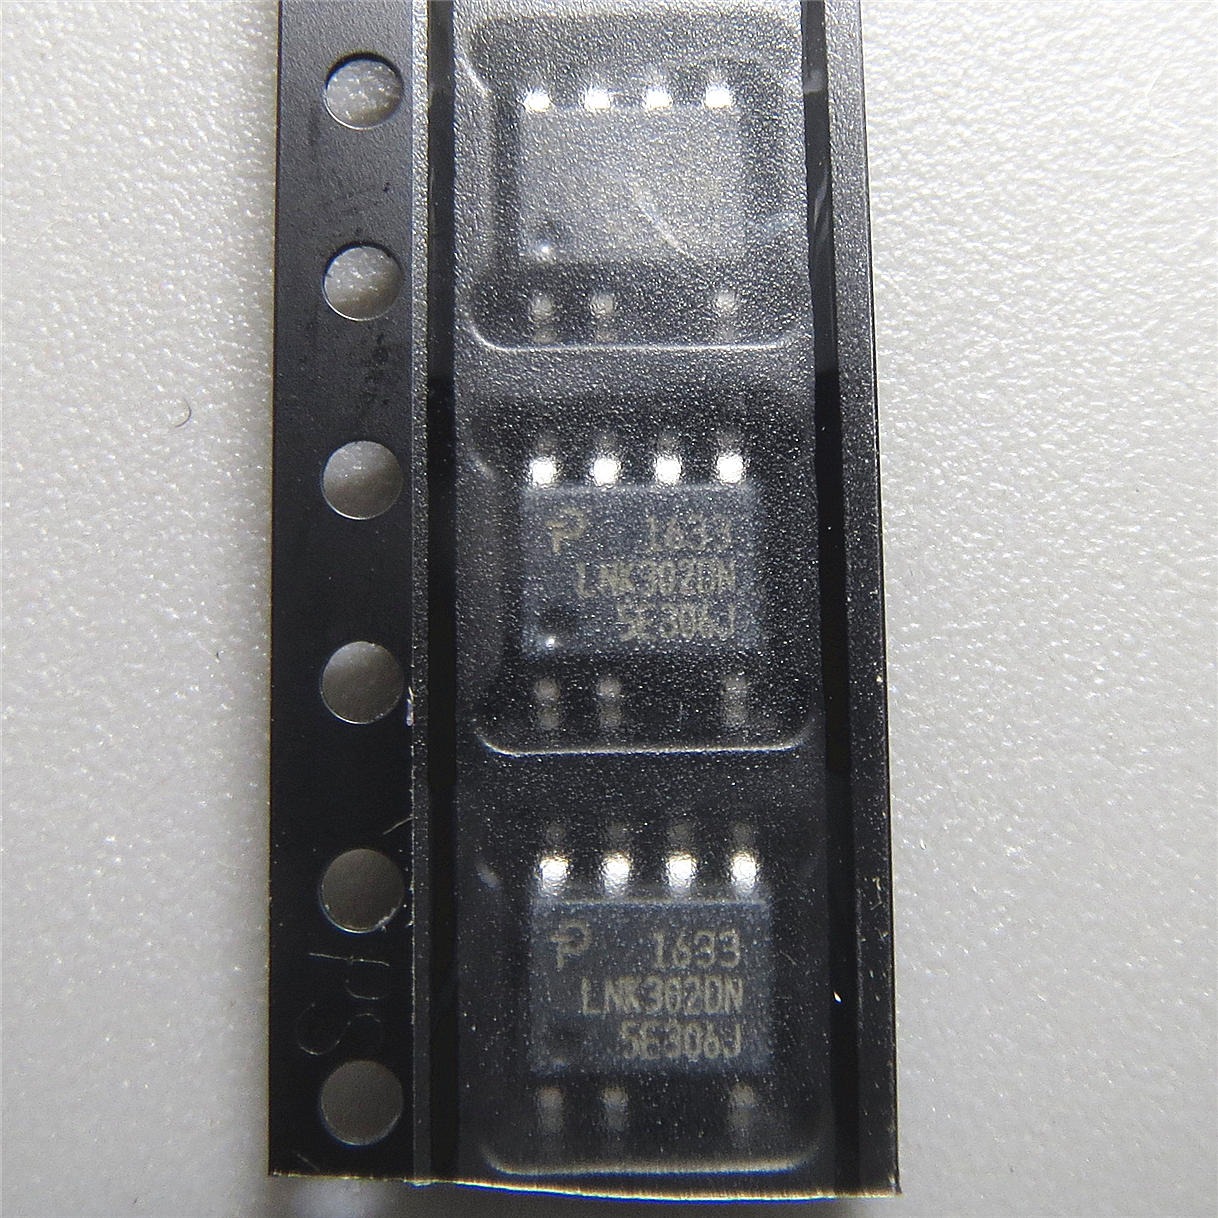 LNK302DN 1633 代理  触摸芯片 单片机  电源管理芯片 放算IC专业代理商芯片配单